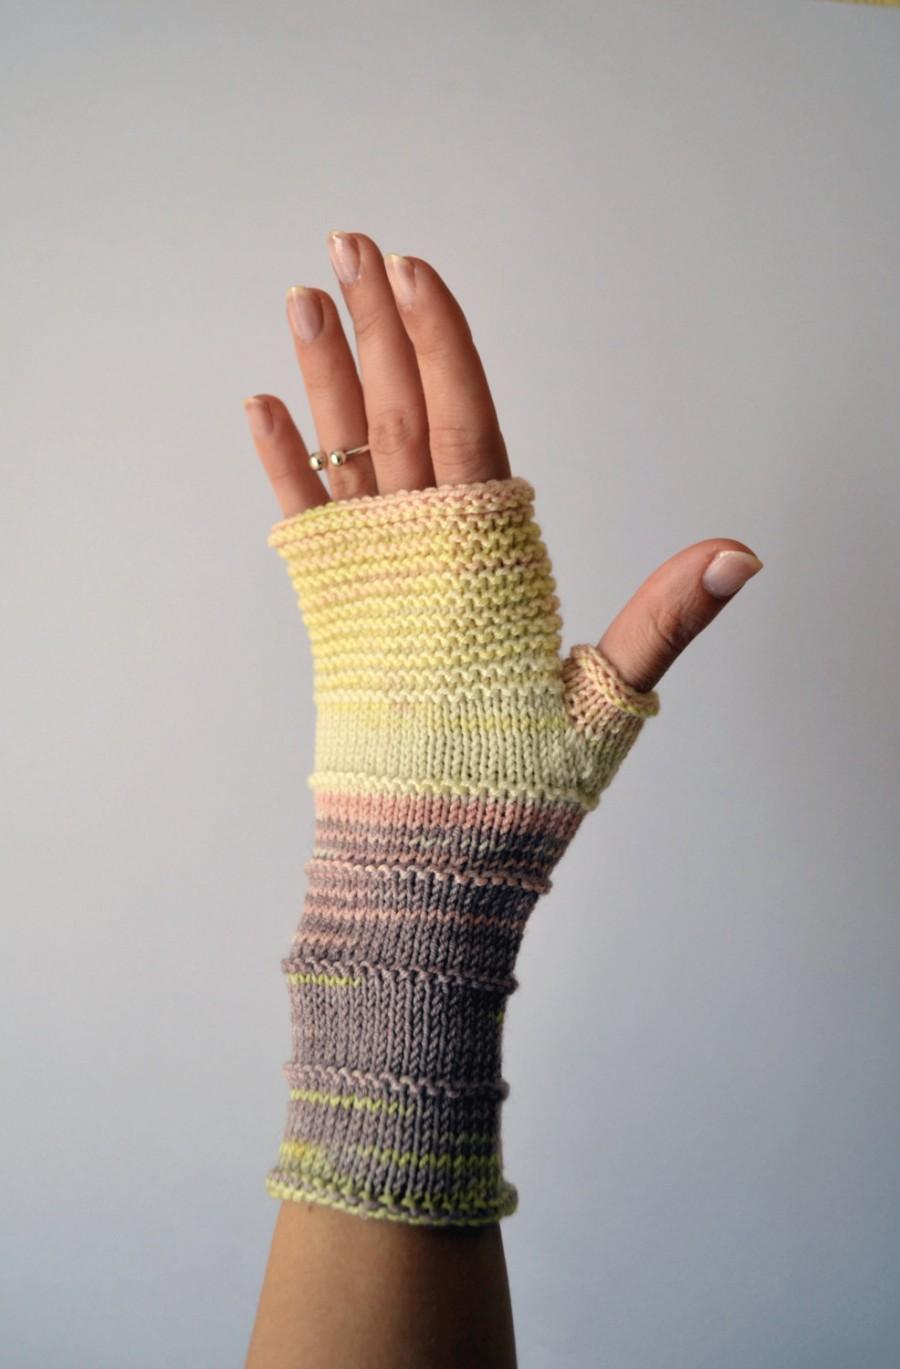 Wedding - Knit fingerless gloves - Merino Wool Fingerless - Colorful Accessories - Winter Gloves - Gift For Her - Rainbow Fingerless Gloves nO 155